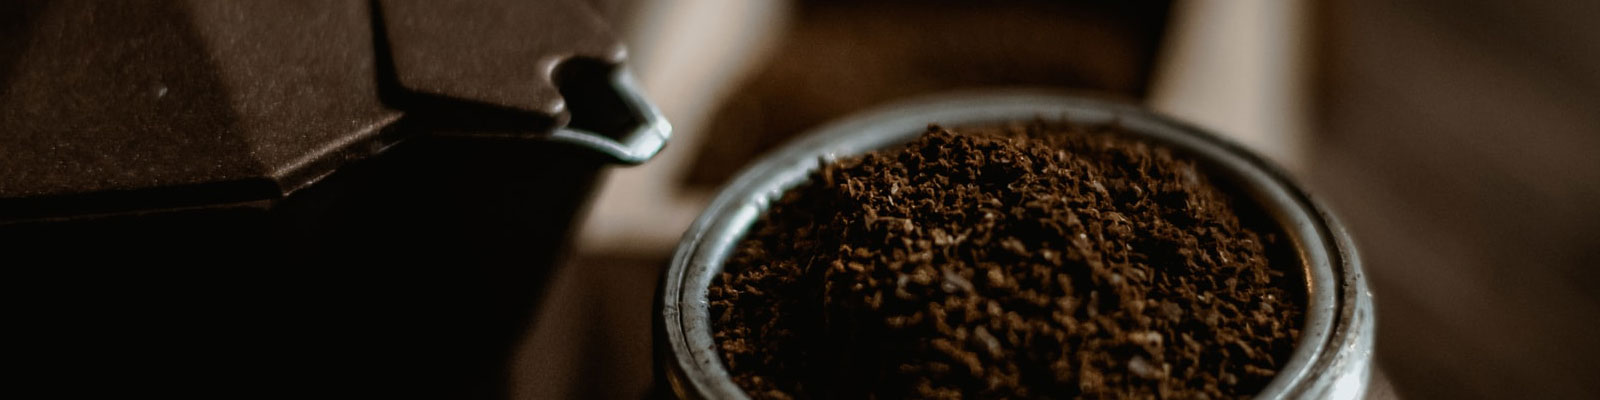 Make Coffee in a Moka Pot